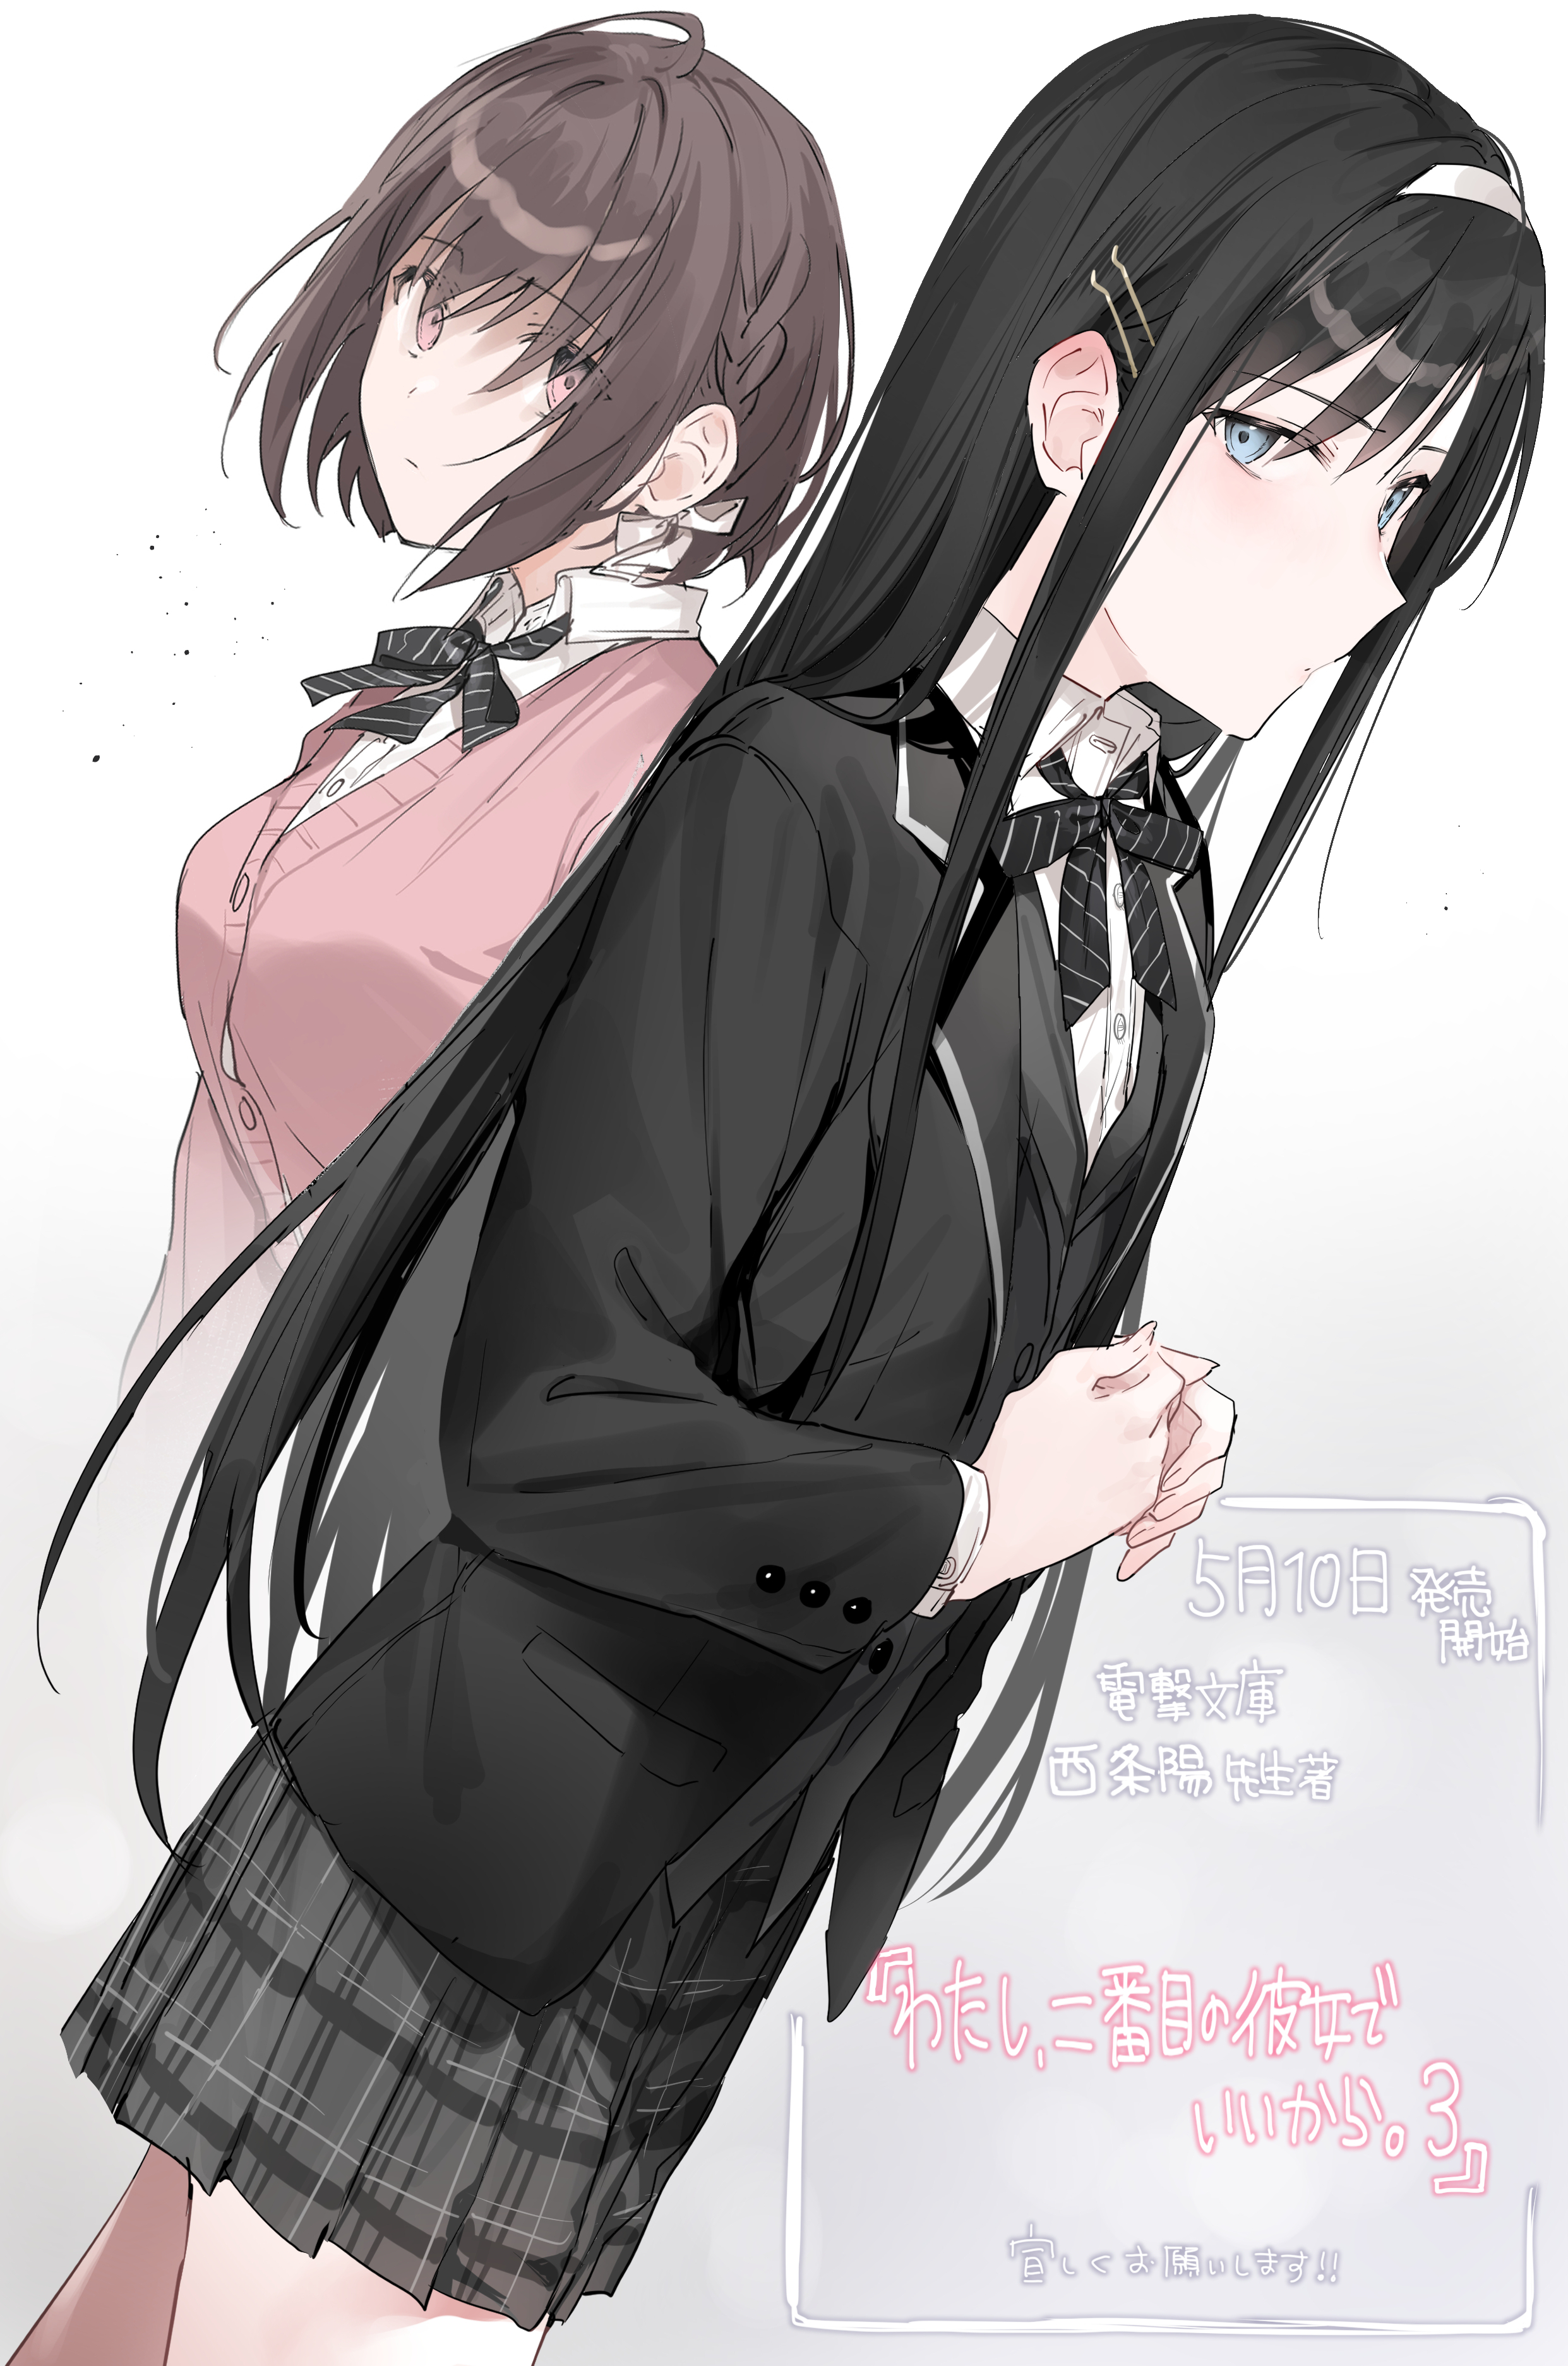 Anime 2483x3746 anime anime girls original characters artwork digital art fan art school uniform schoolgirl